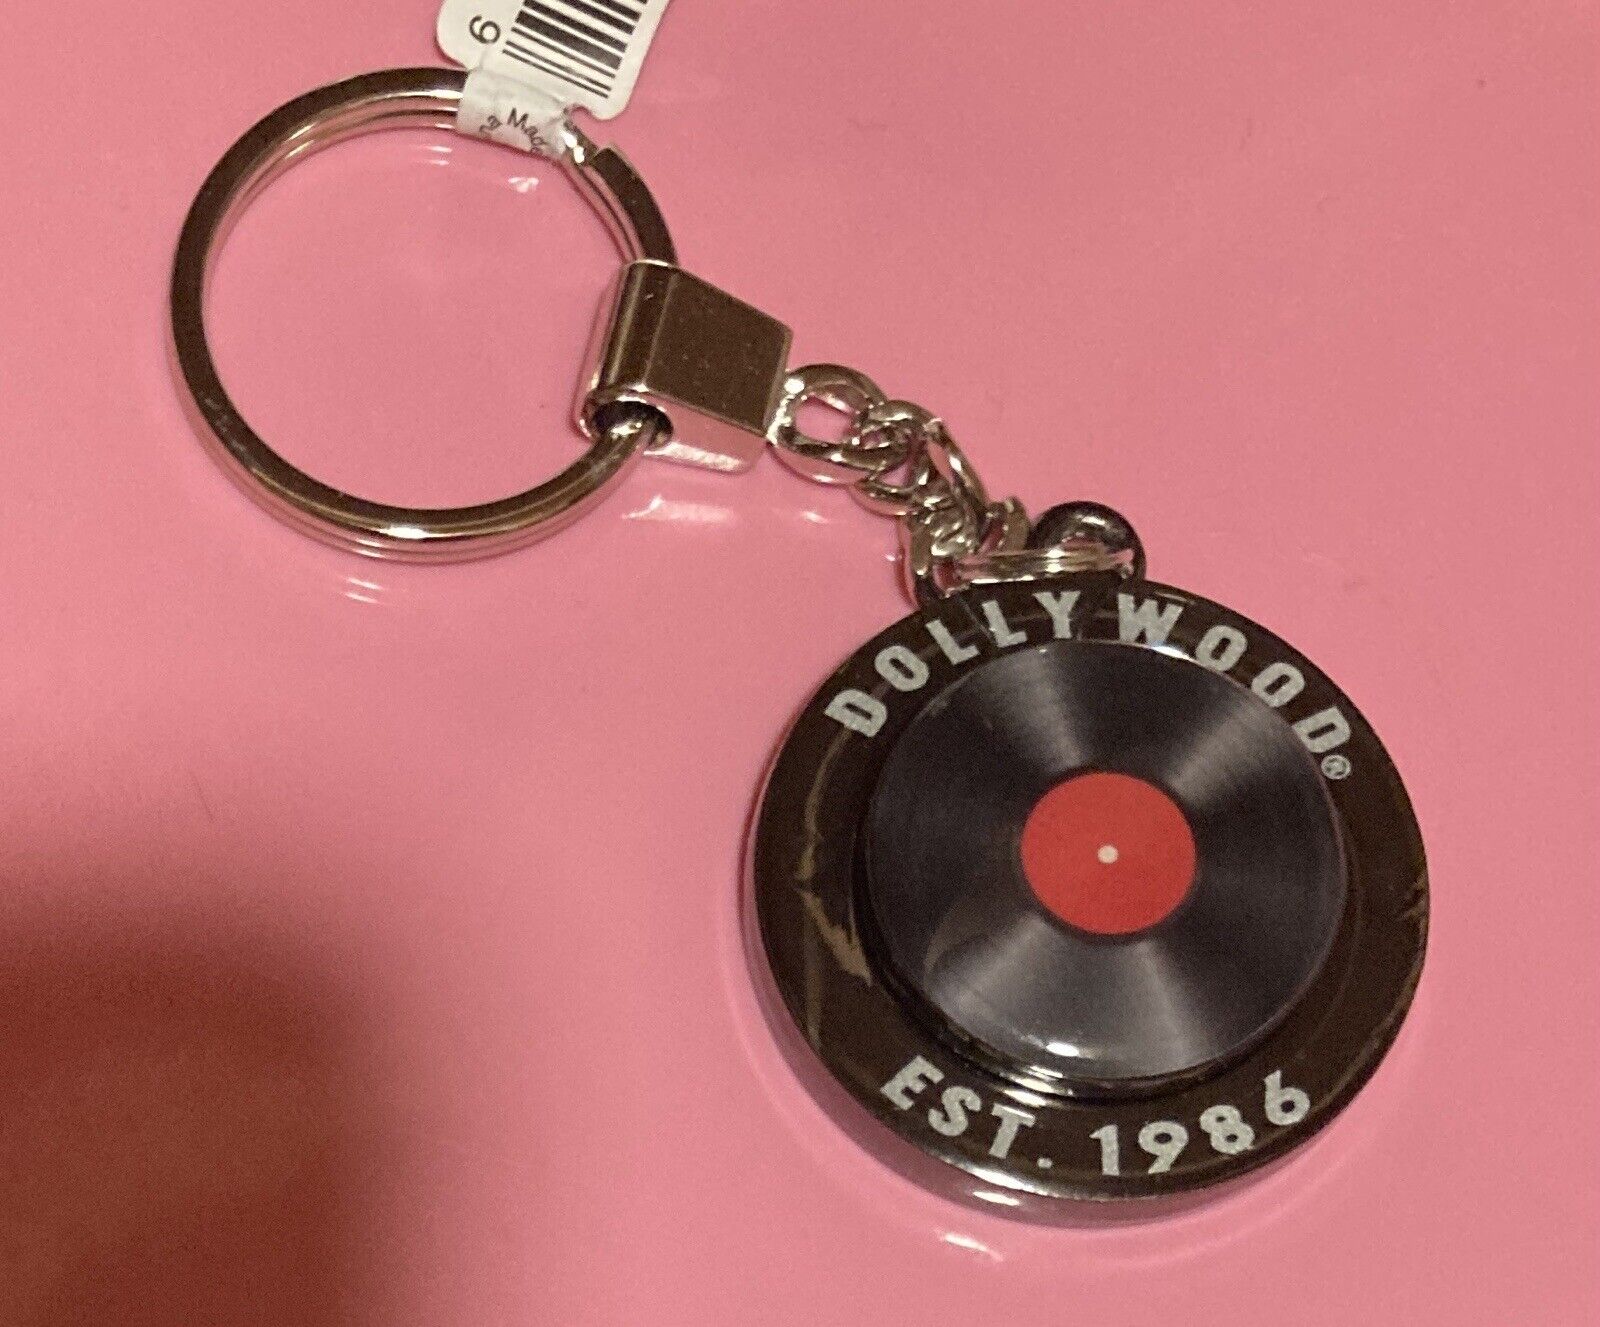 Dollywood Dolly Parton LP Vinyl Record Album  Keychain Spins